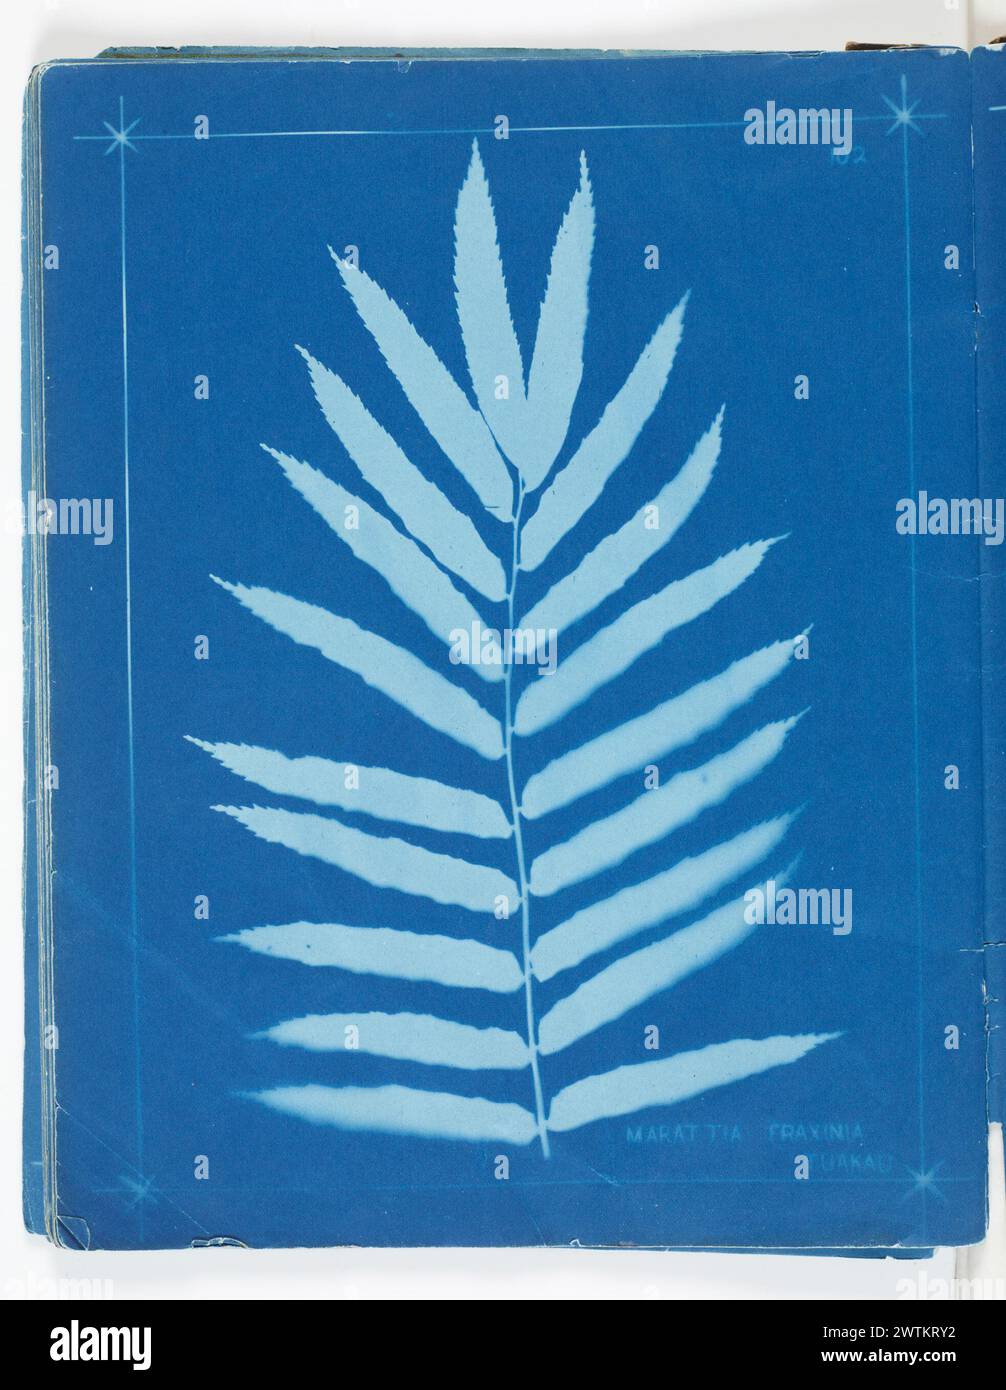 Marattia fraxinia [fraxinea], Tuakau. From the album: New Zealand ferns. 148 varieties cyanotypes, photographic prints Stock Photo